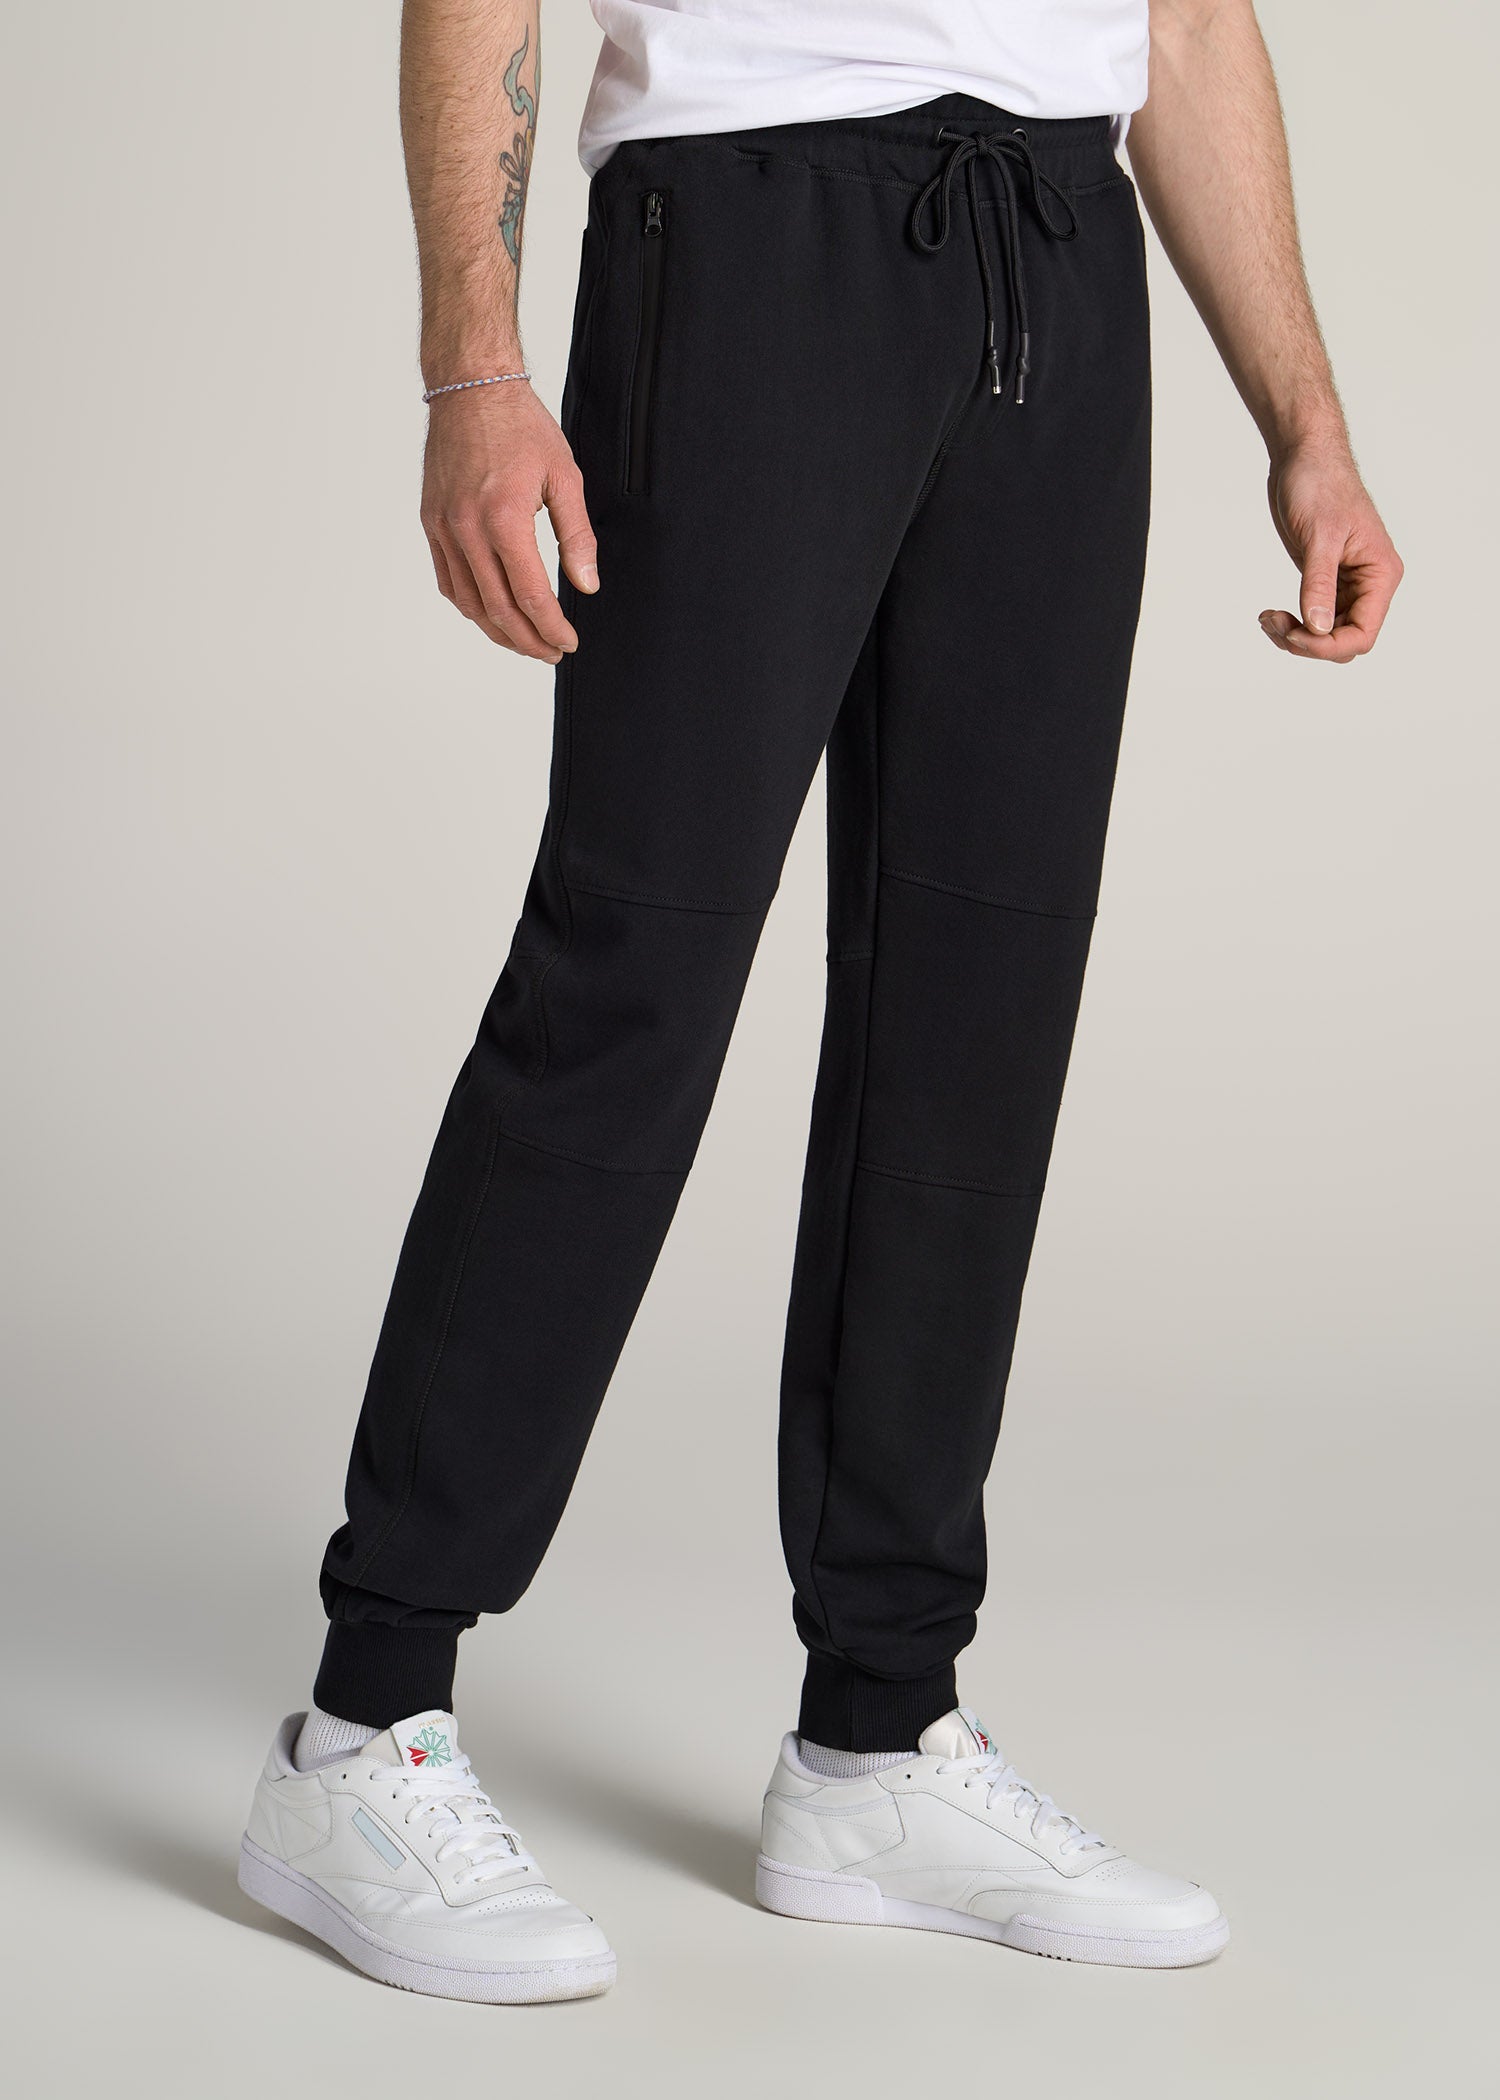 Xersion Ankle Zipper Sweat Pants for Men